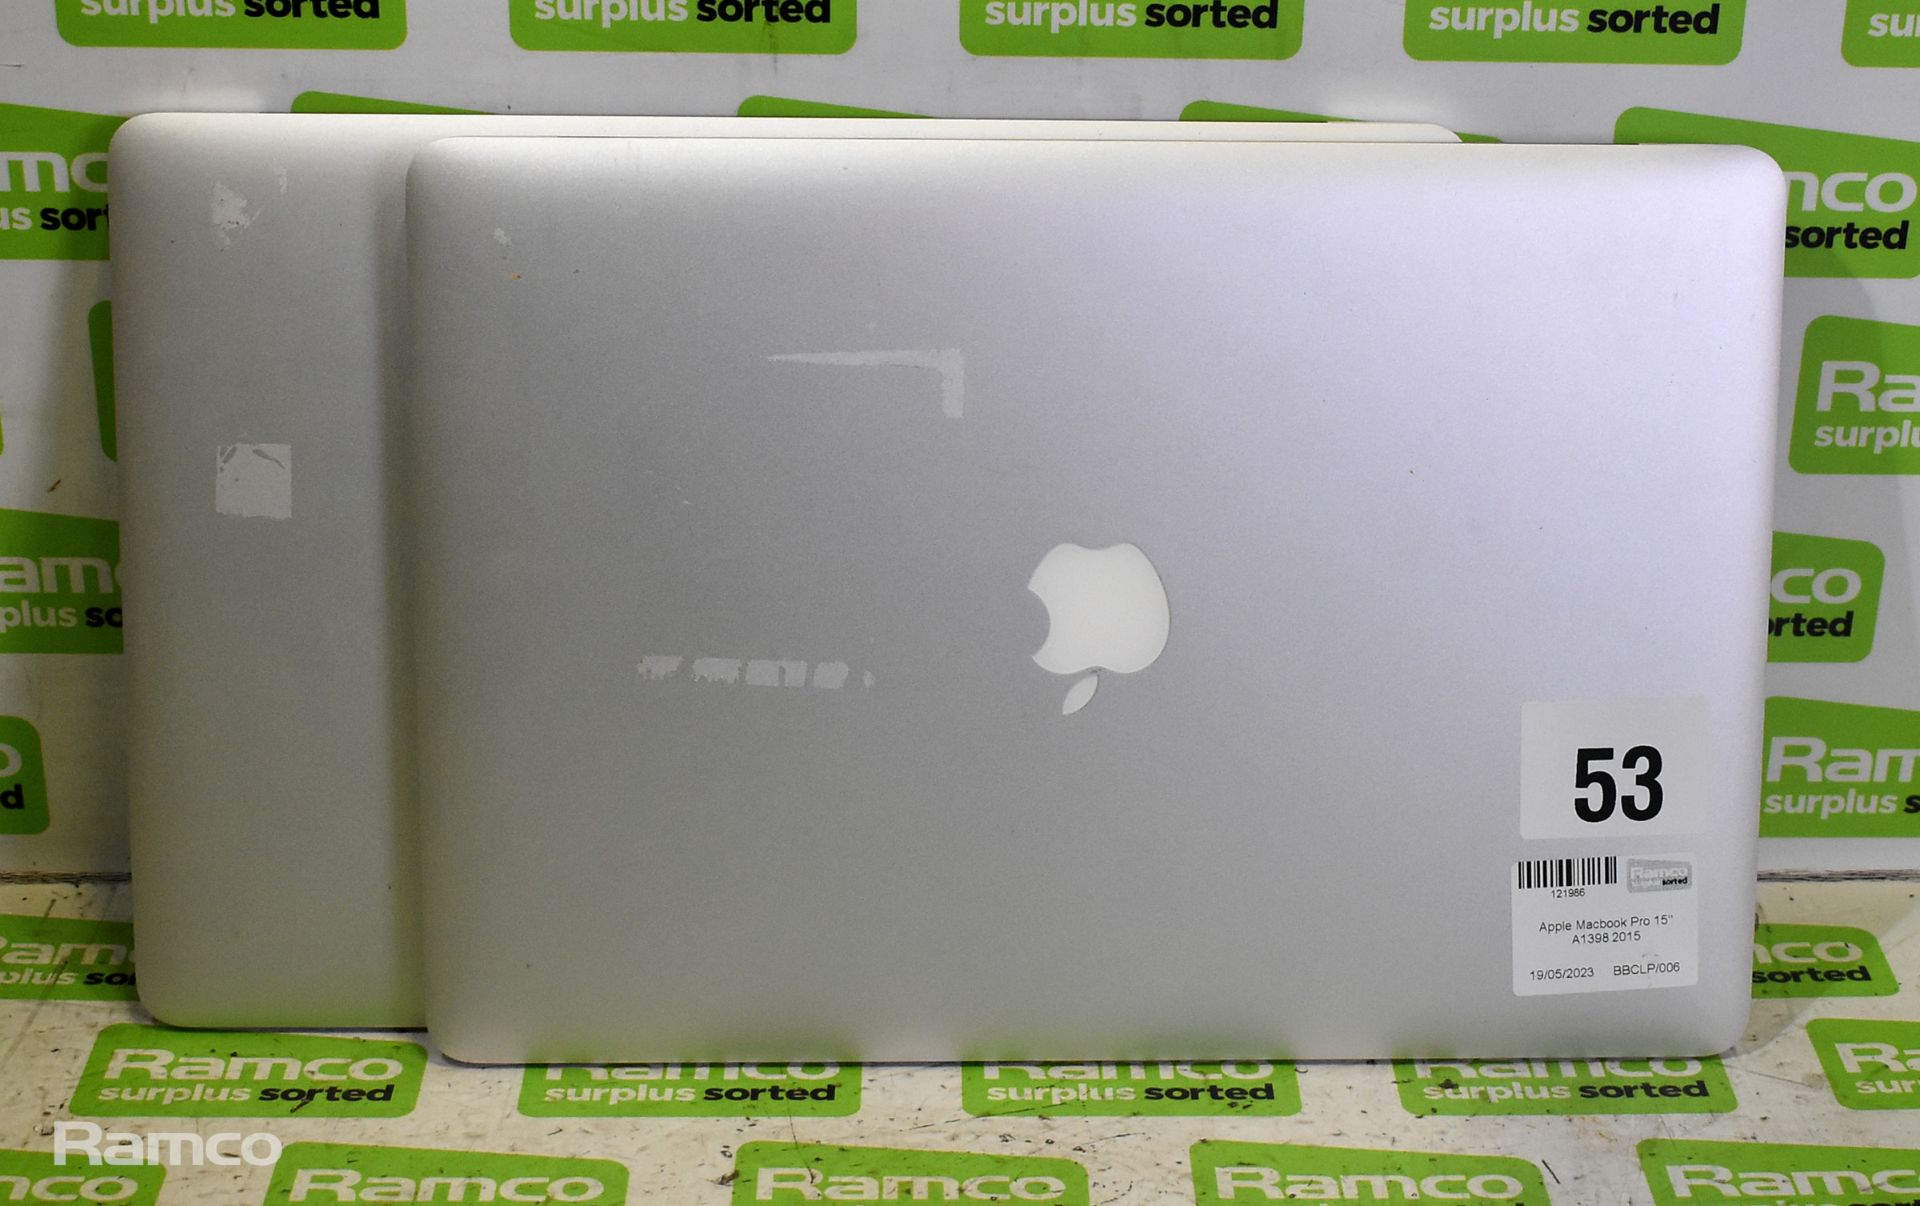 2x Apple Macbook Pros - 15 inch - A1398 - 2015 - see description